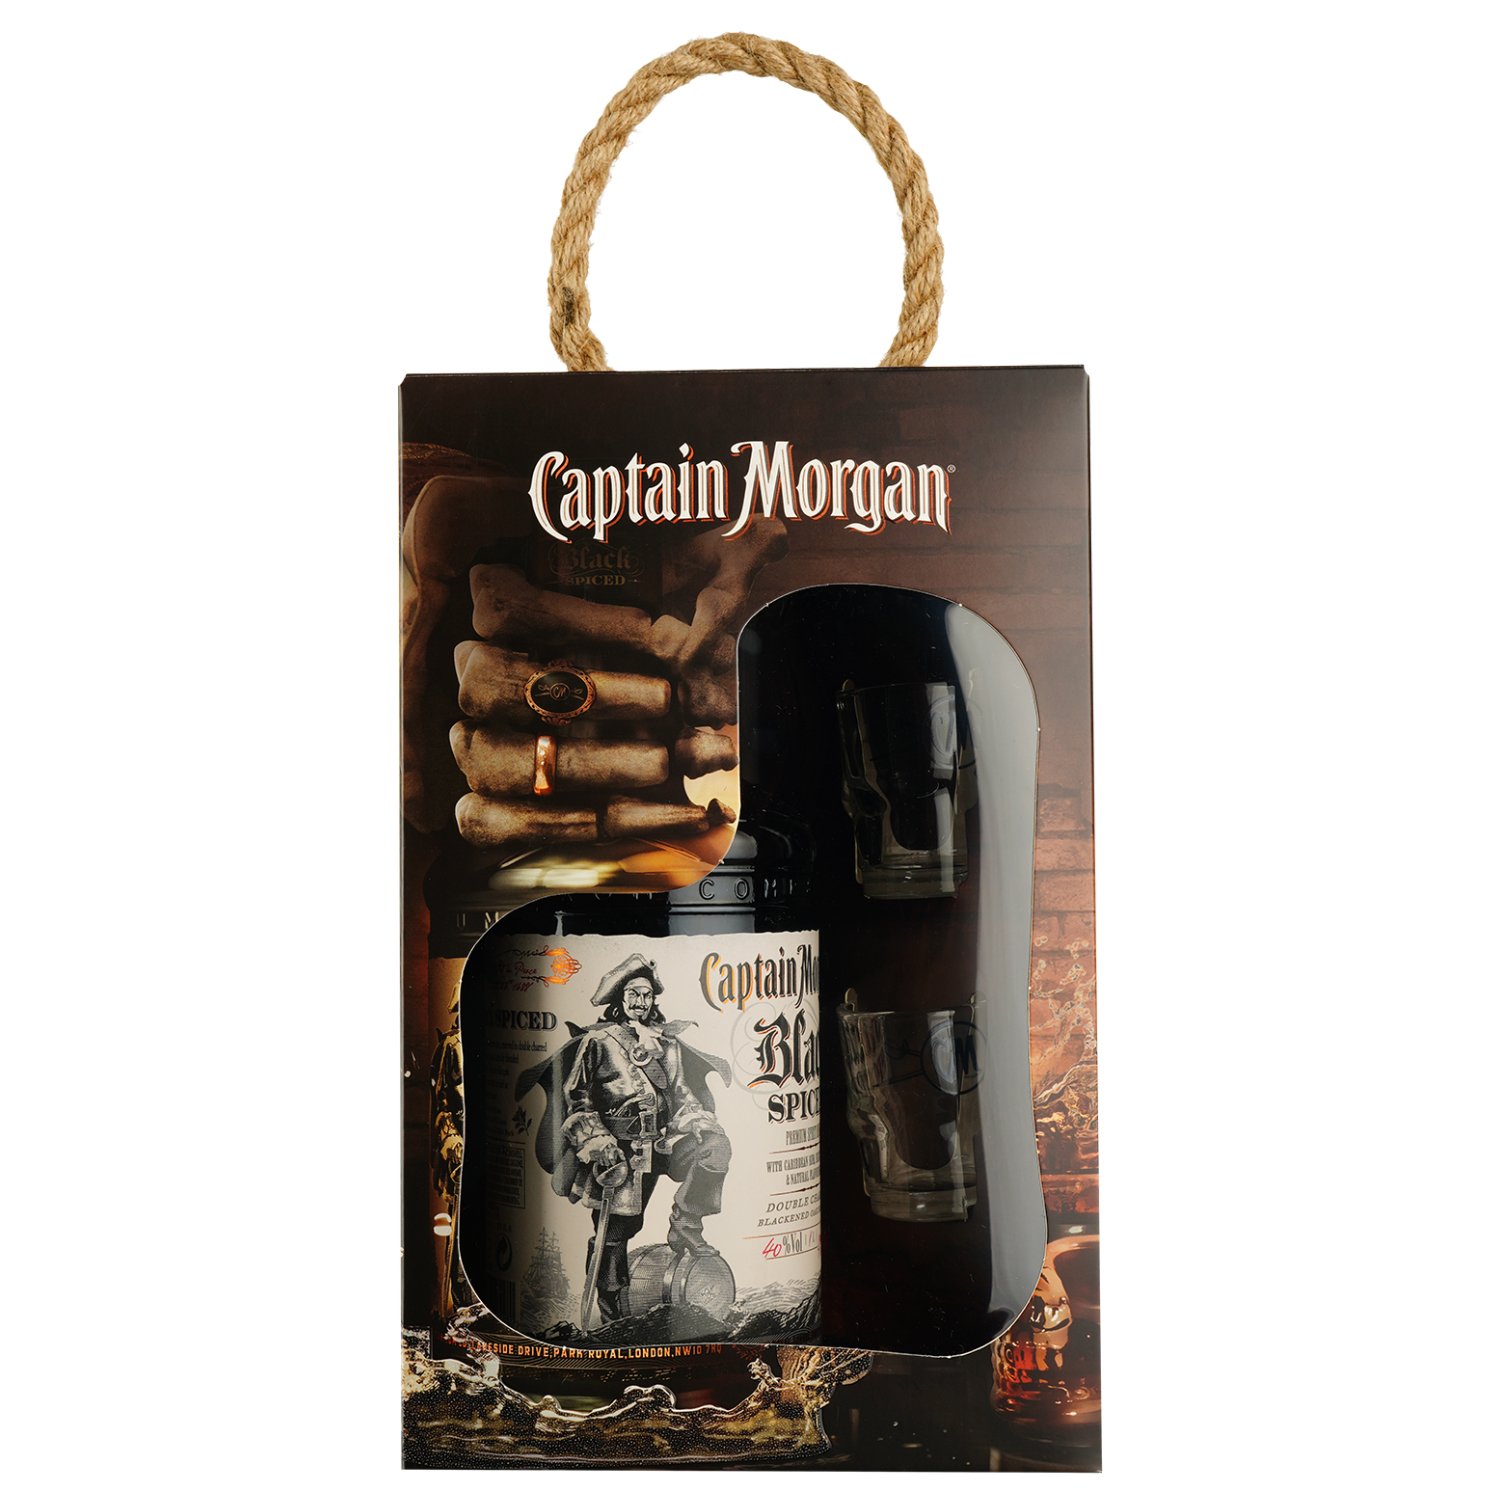 Ромовый напиток Captain Morgan Black Spiced, 40%, 1 л + 2 рюмки - фото 1